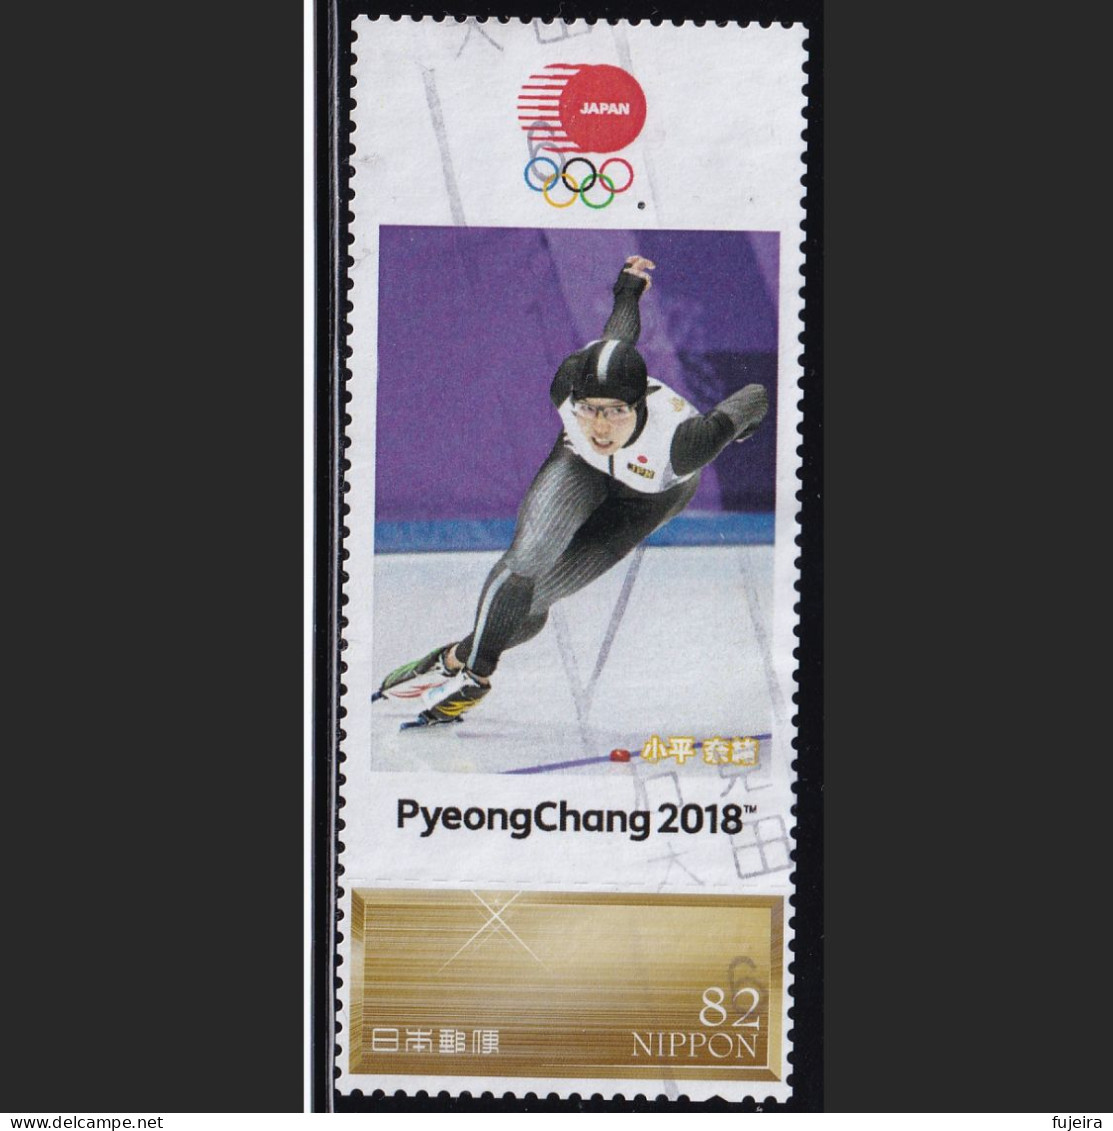 Japan Personalized Stamp, Olympic Games PyeongChang 2018 Skate Kodaira Nao (jpv9996) Used - Usati